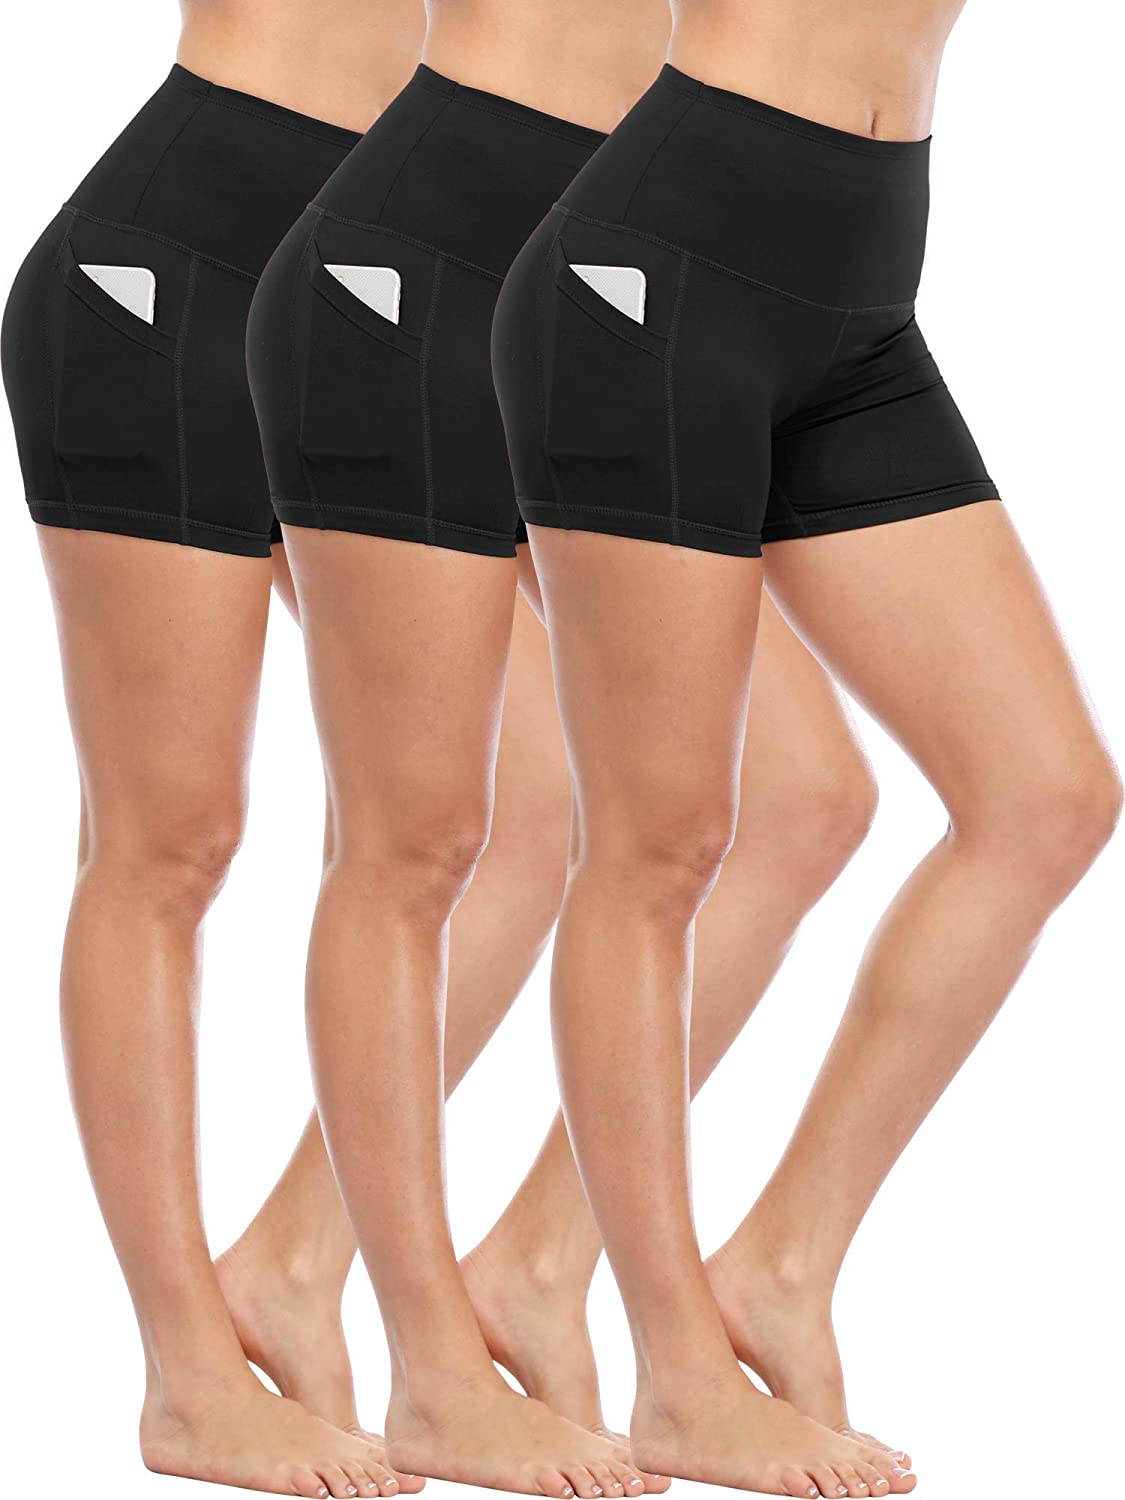 Cadmus Women's High-Waist Compression Workout Running Sports Shorts with Pocket